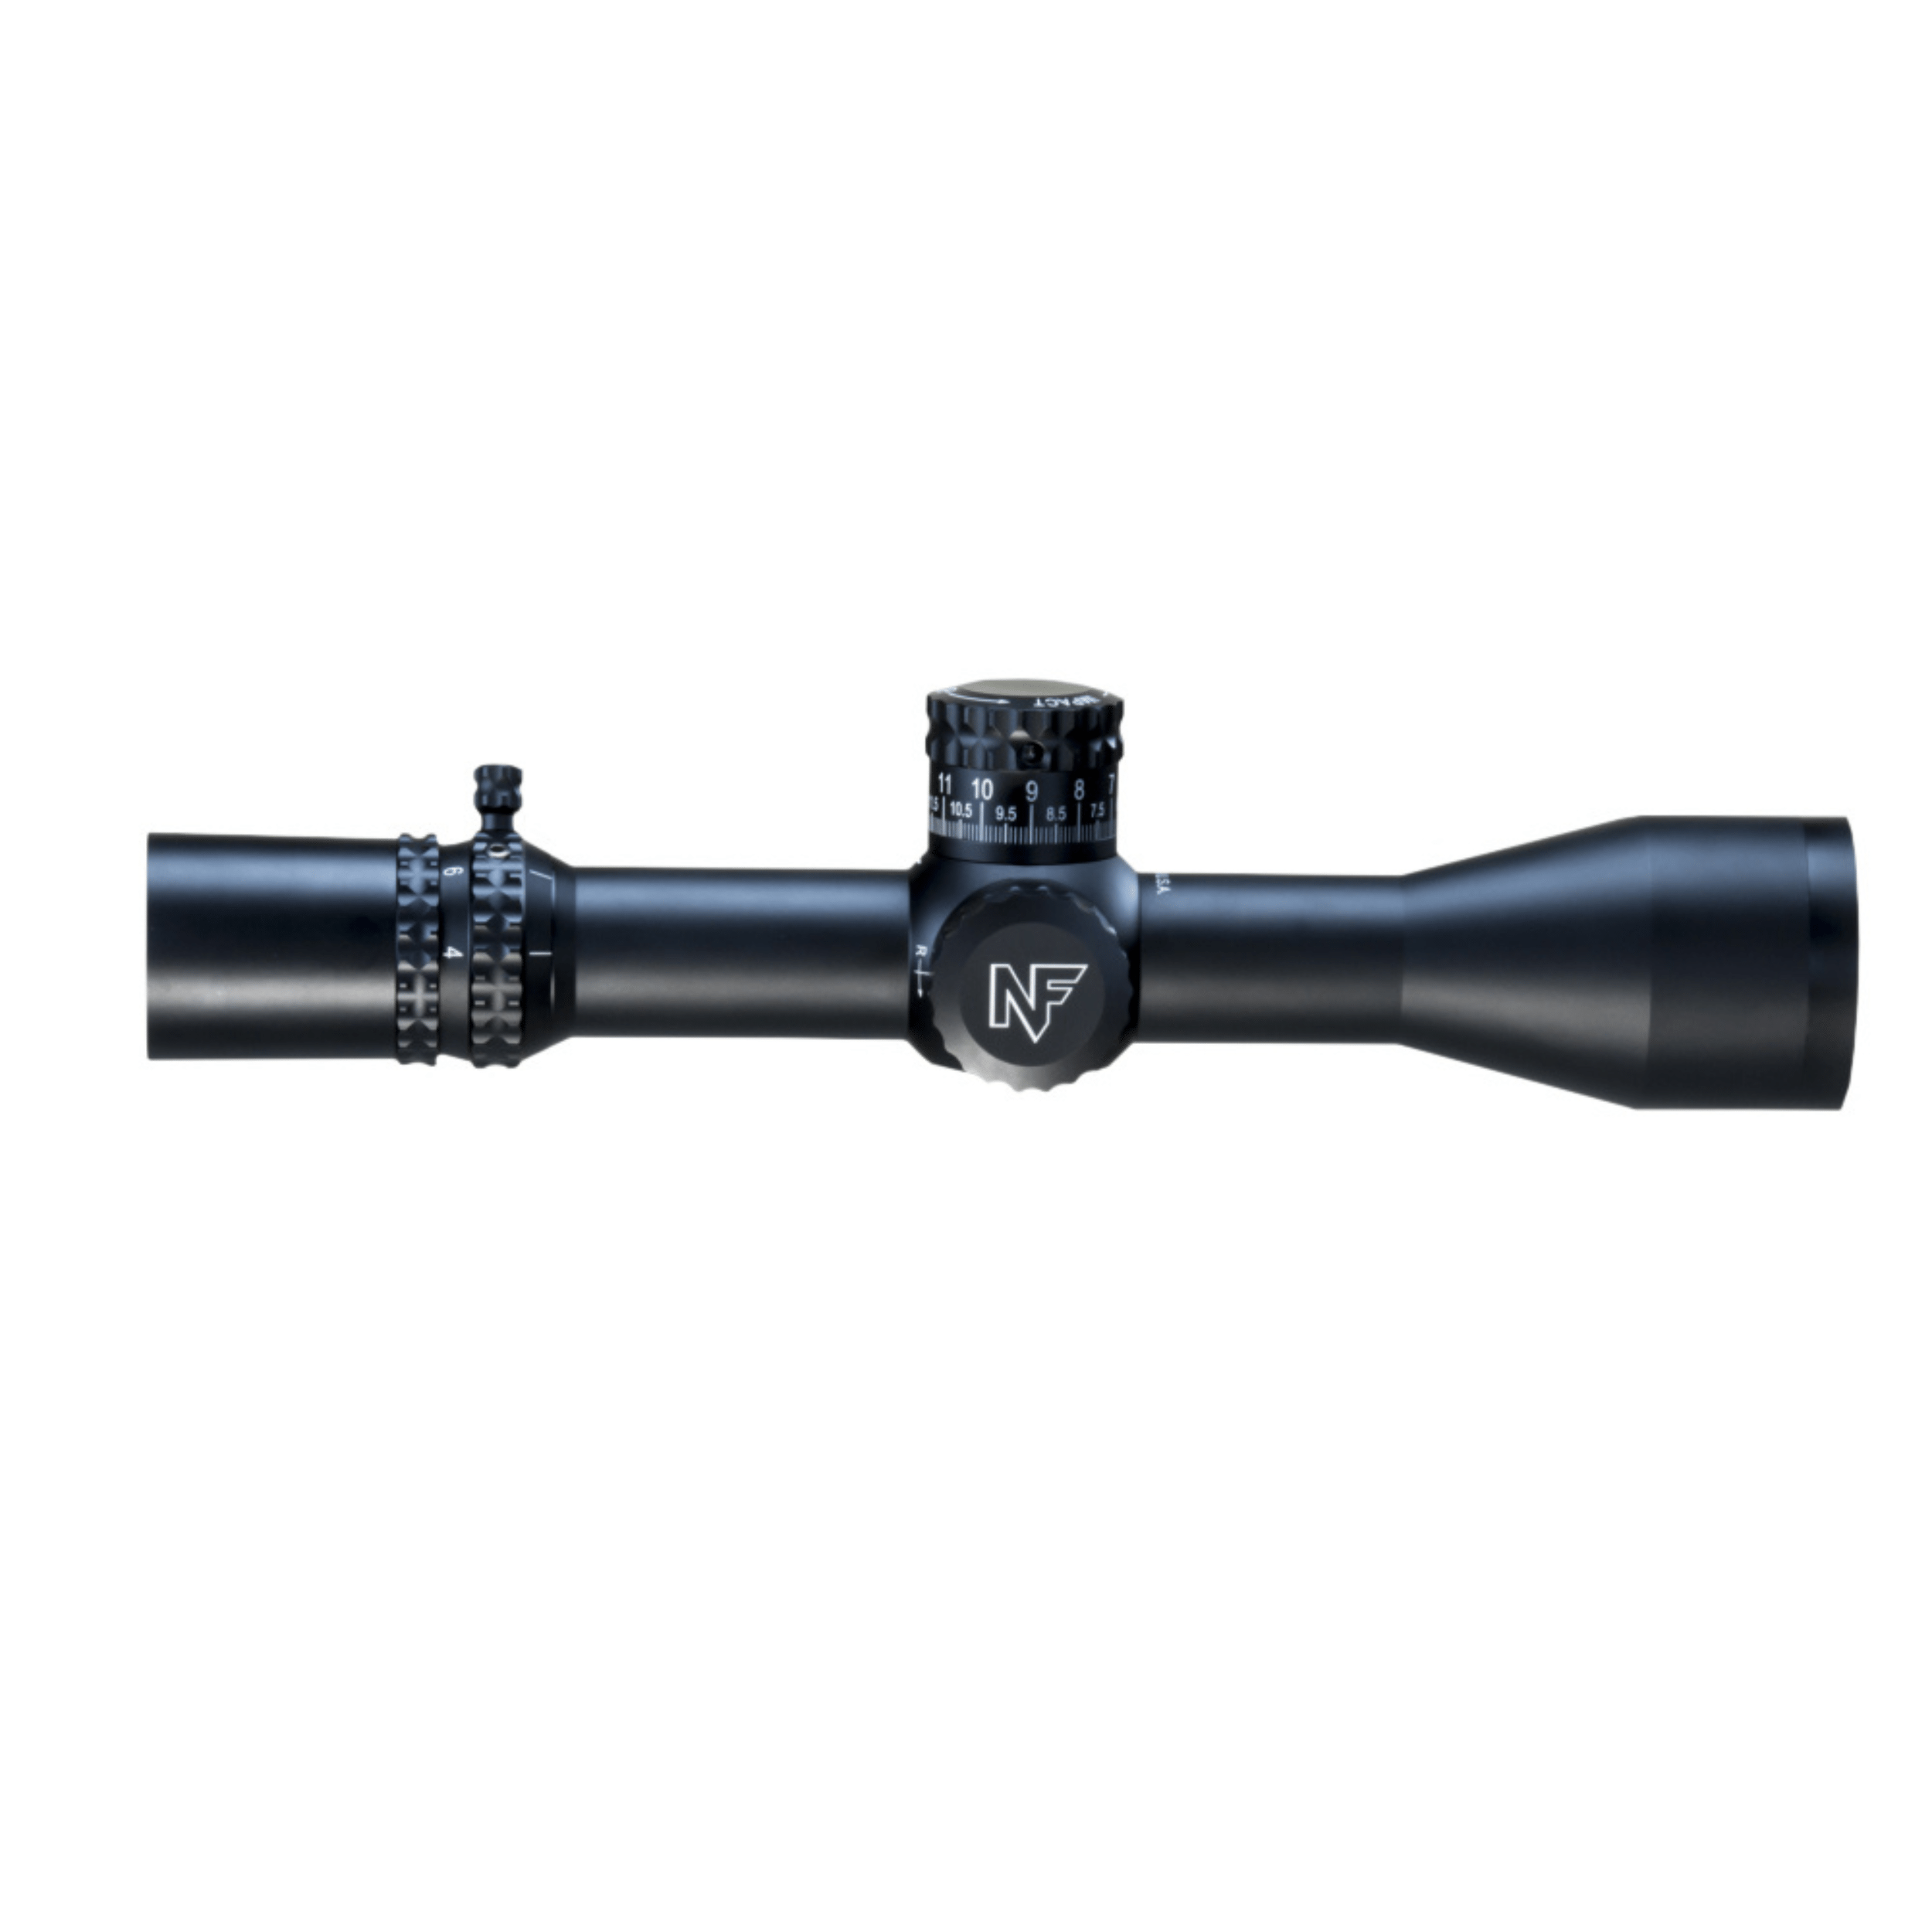 ATACR – 4-16x50mm F2